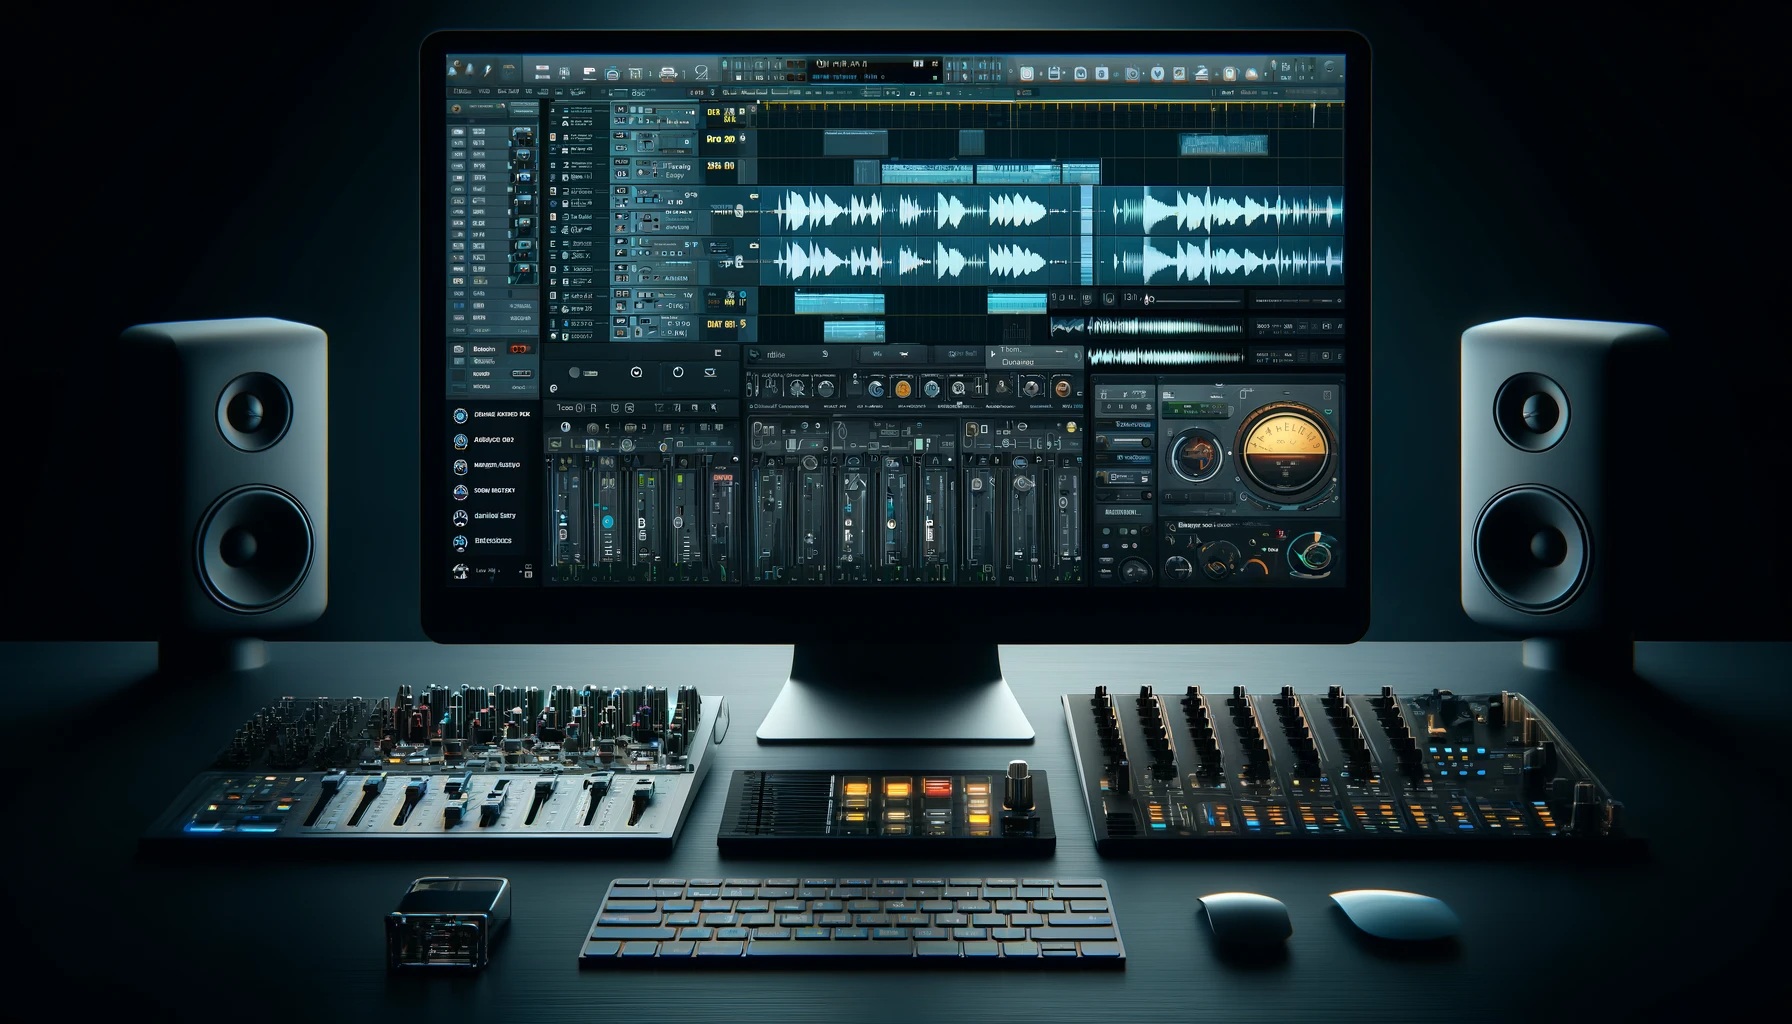  image of the digital audio workstation (DAW) interface